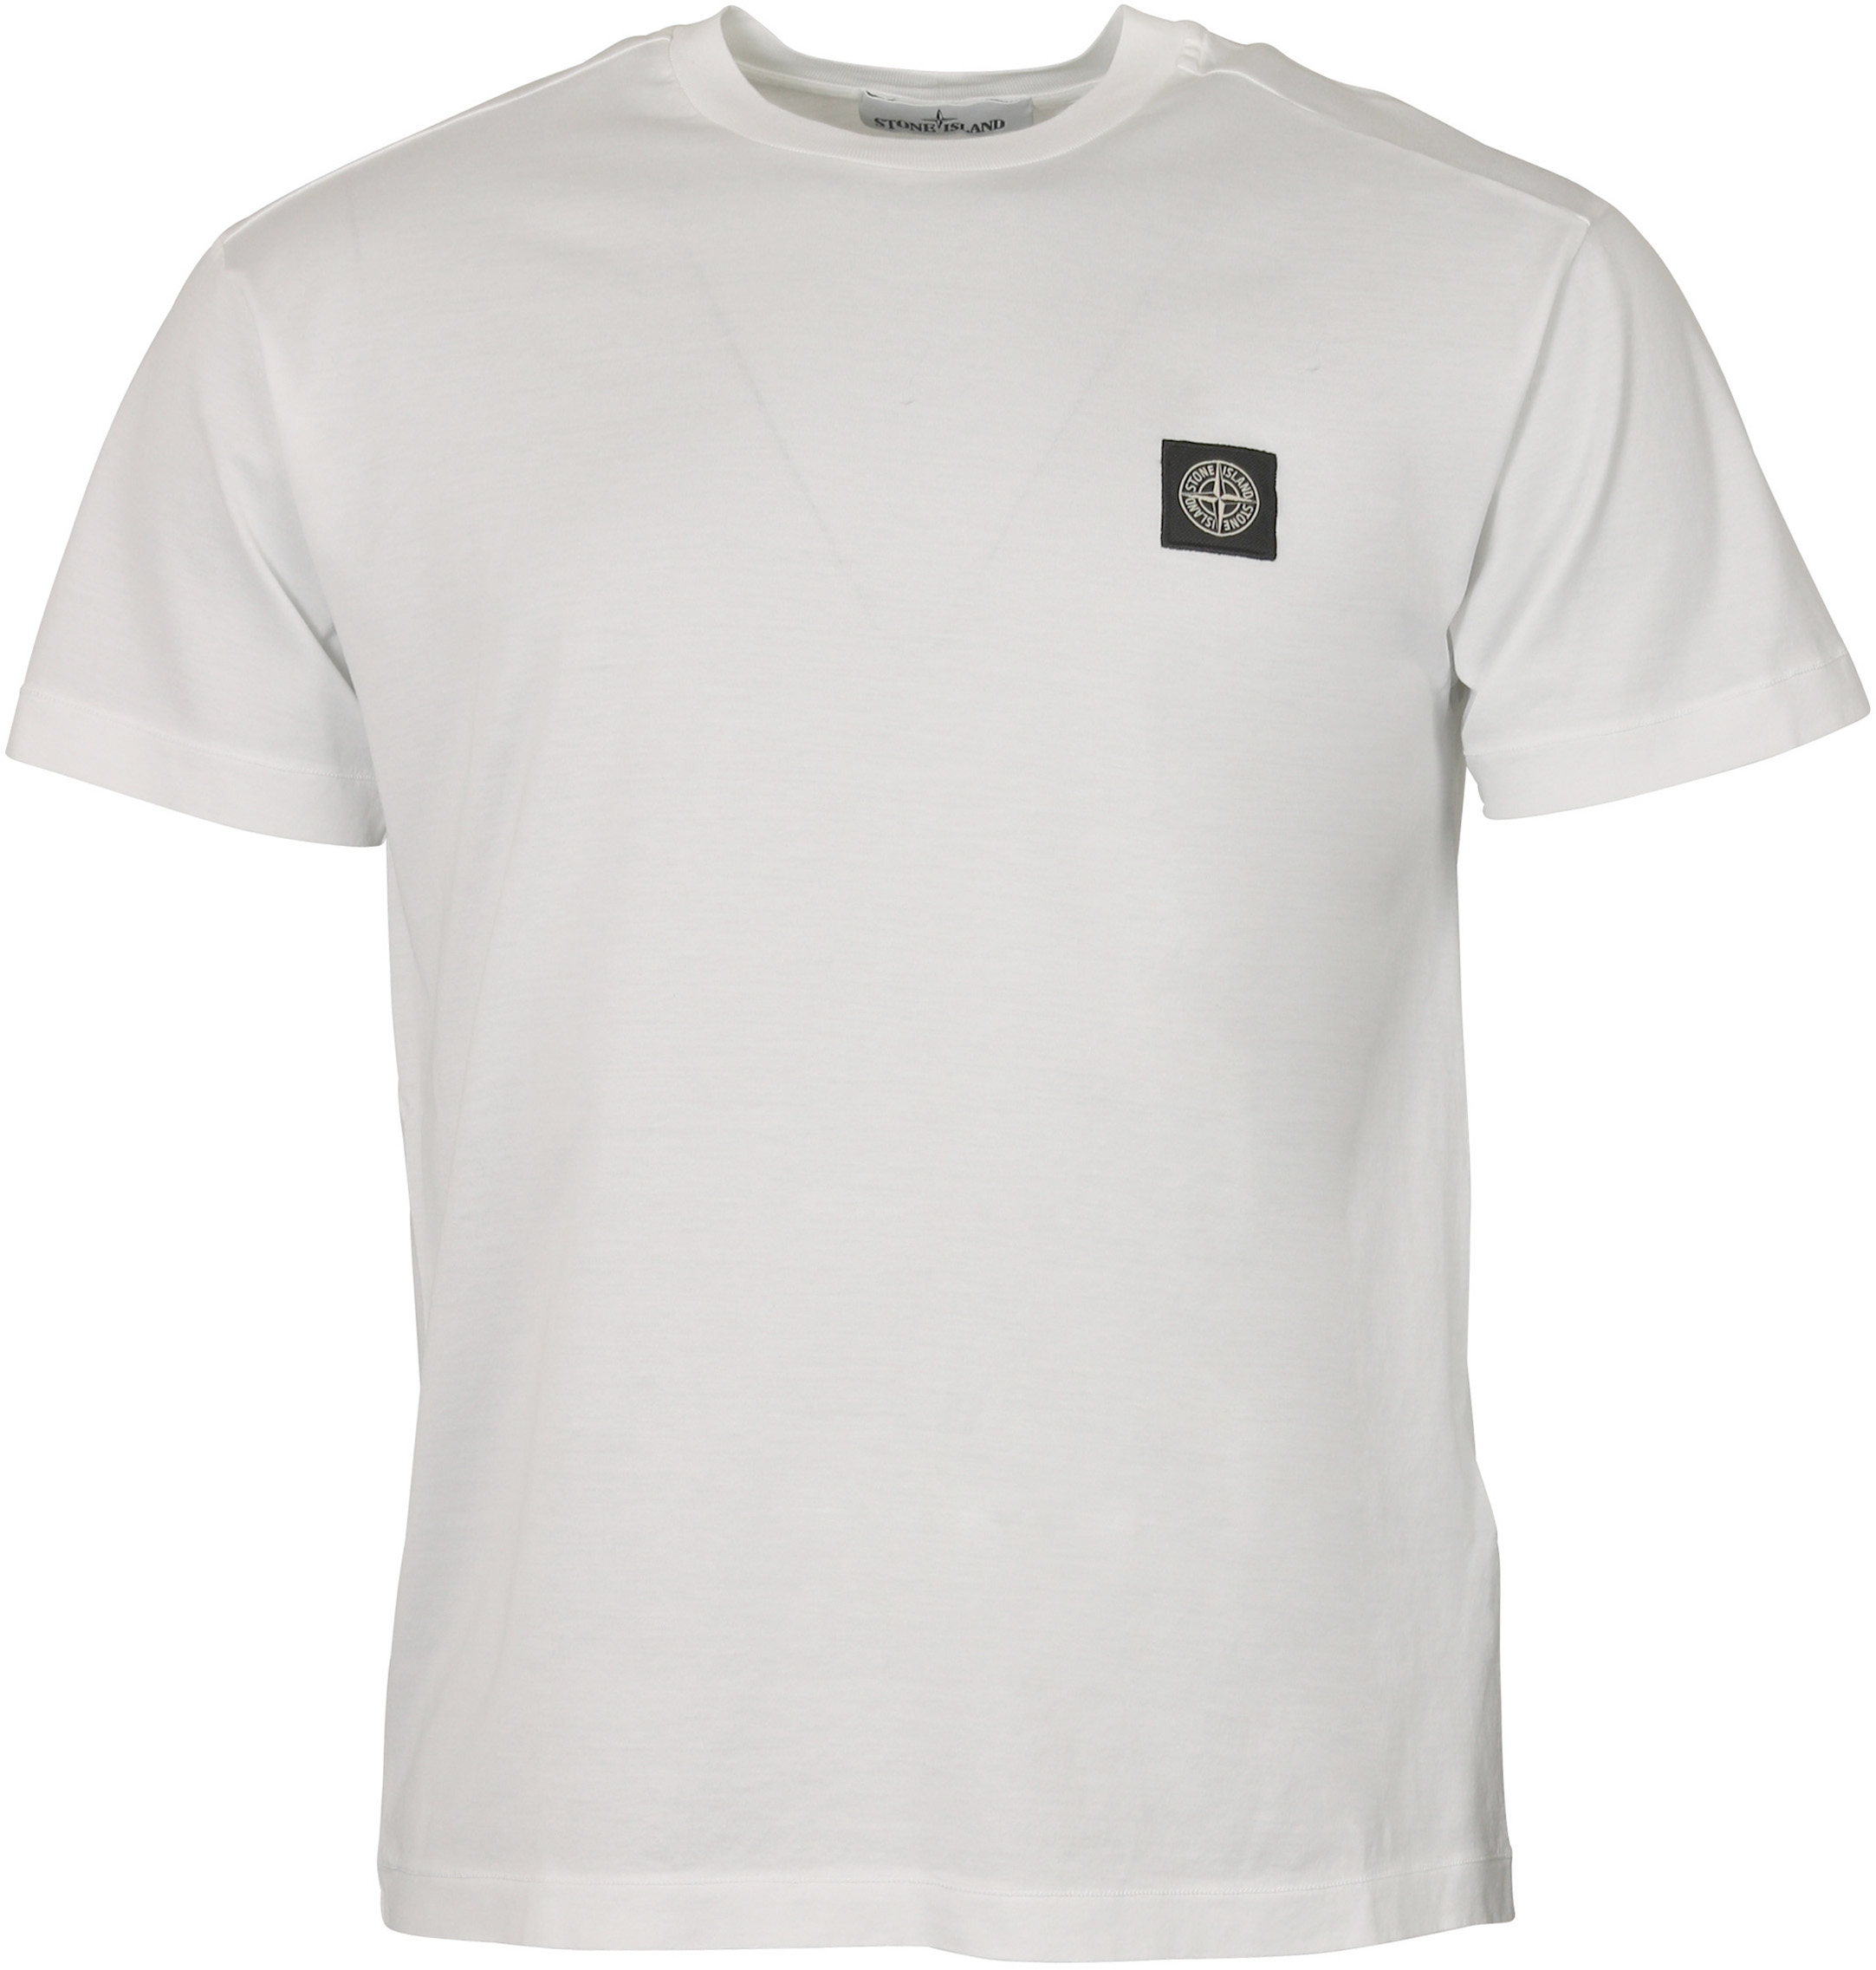 Stone Island T-Shirt White S